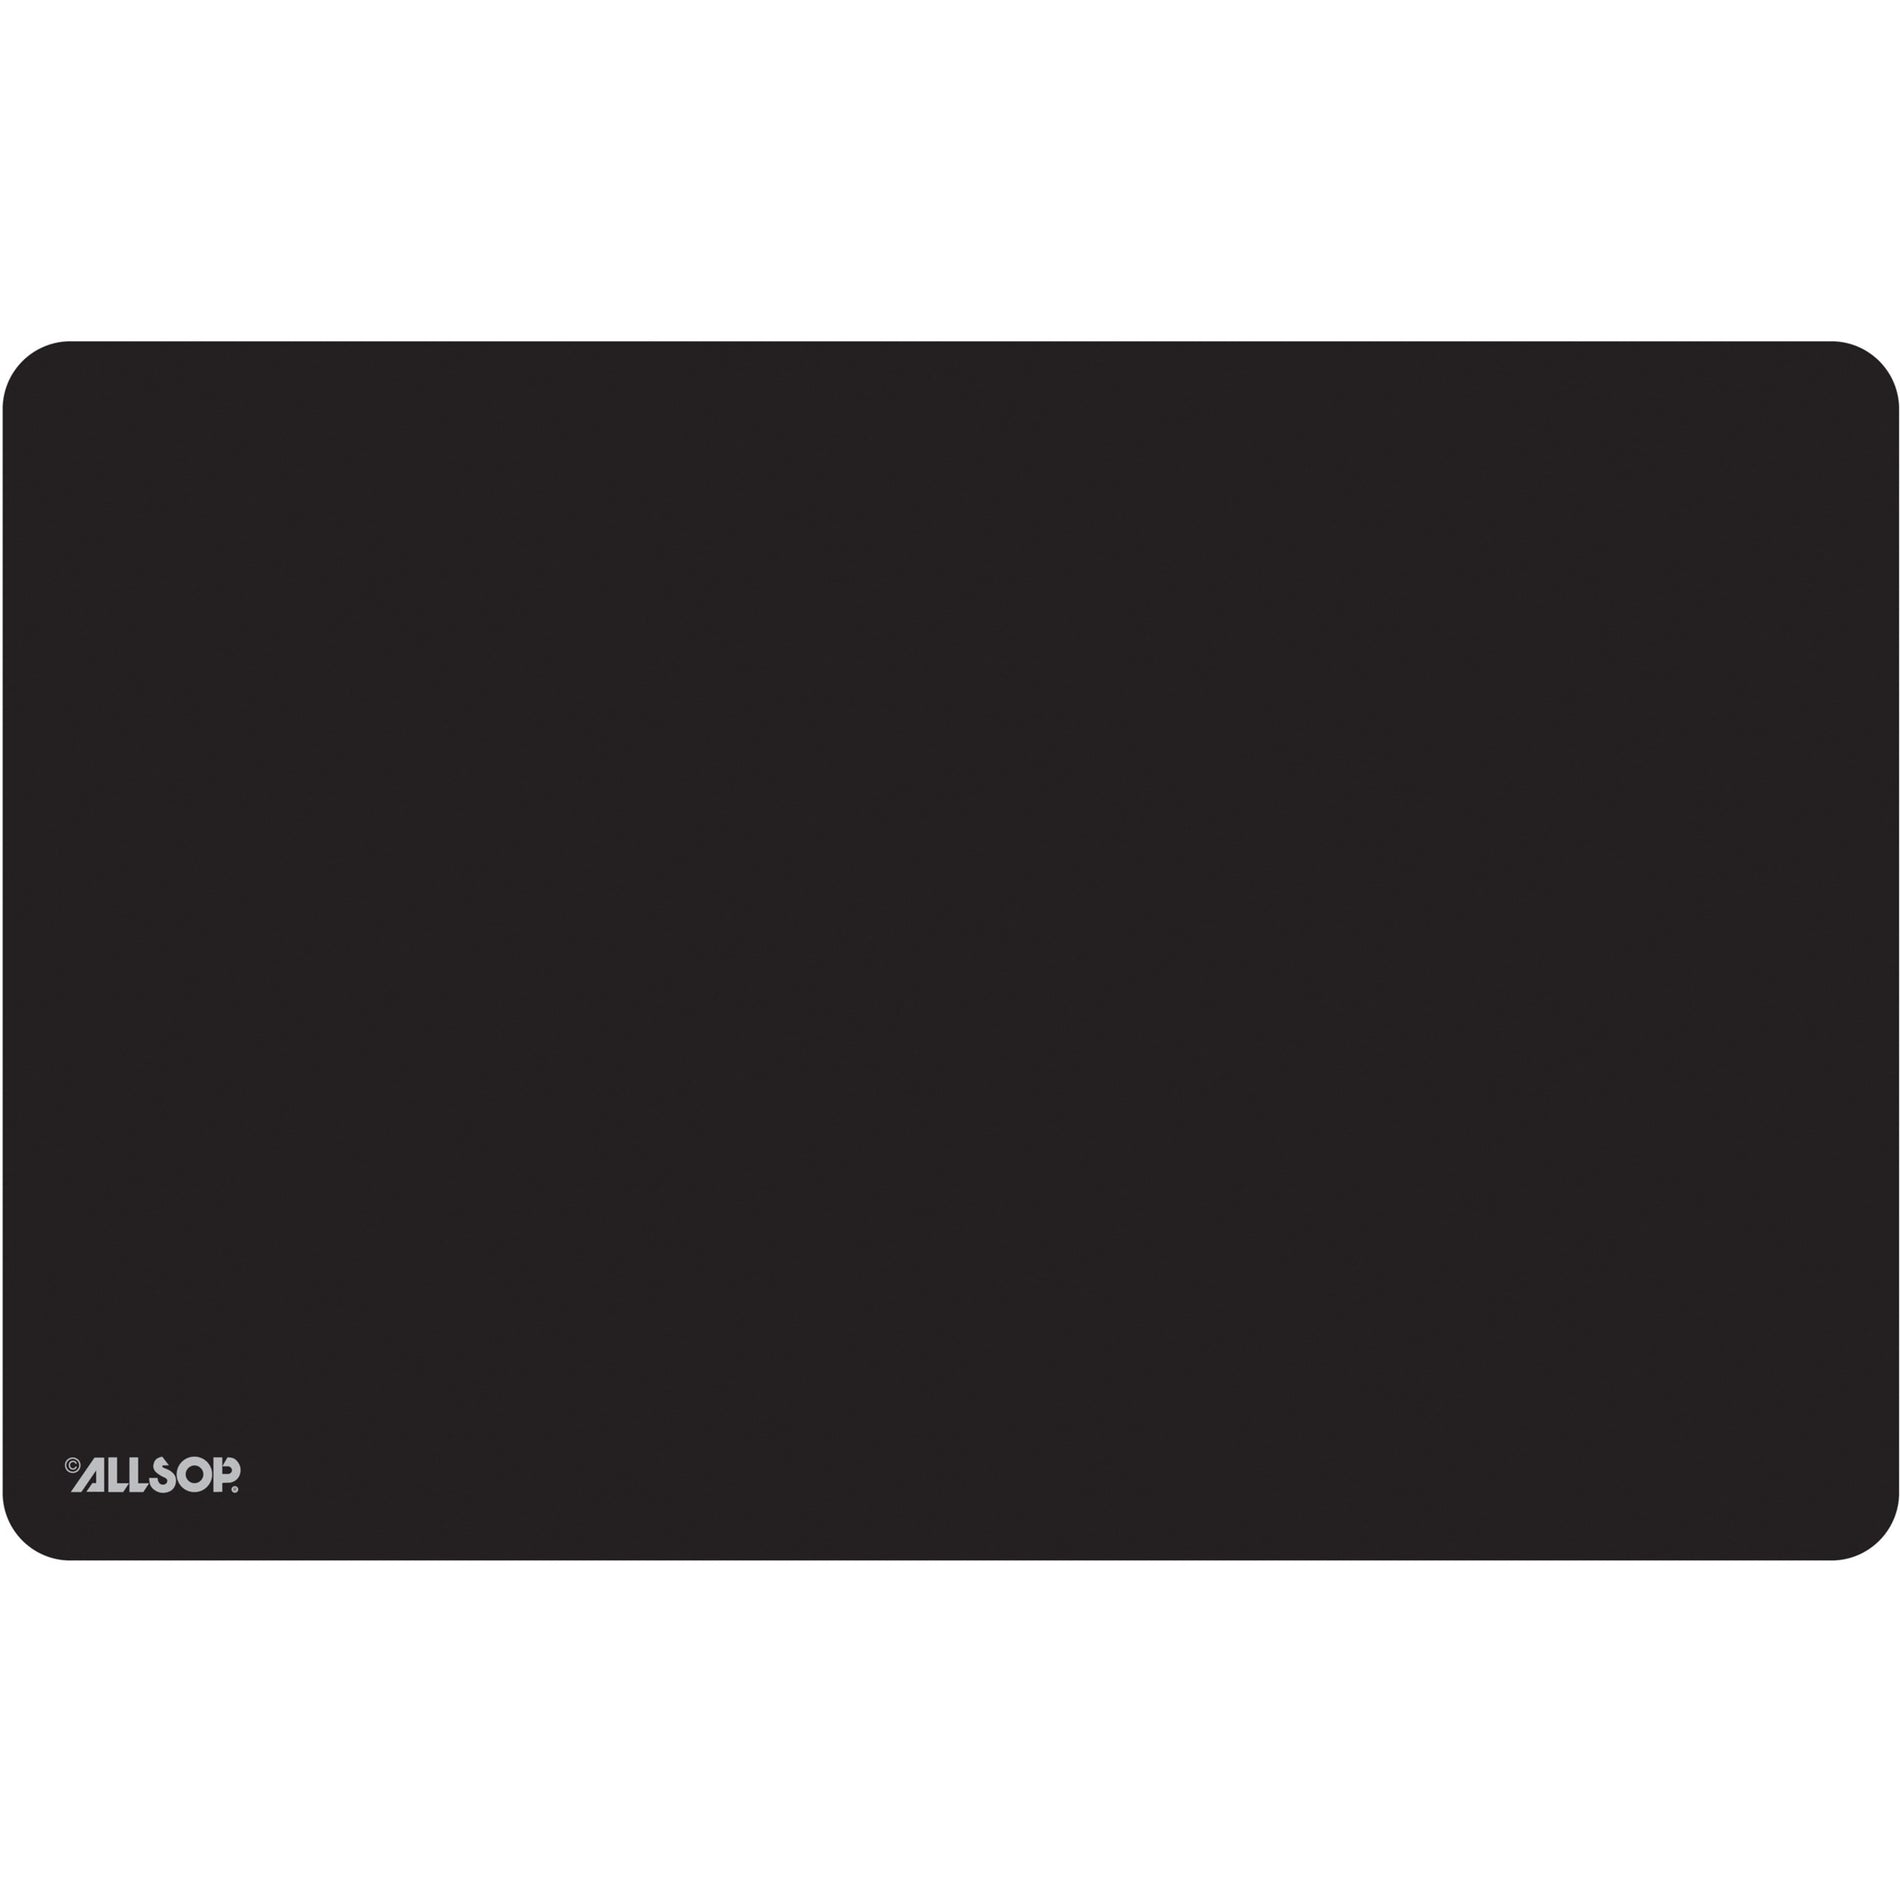 Allsop 29649 Widescreen Mousepad - Black, Ideal for Optical, Laser, and Roller Ball Mice, Non-Slip Rubber Base